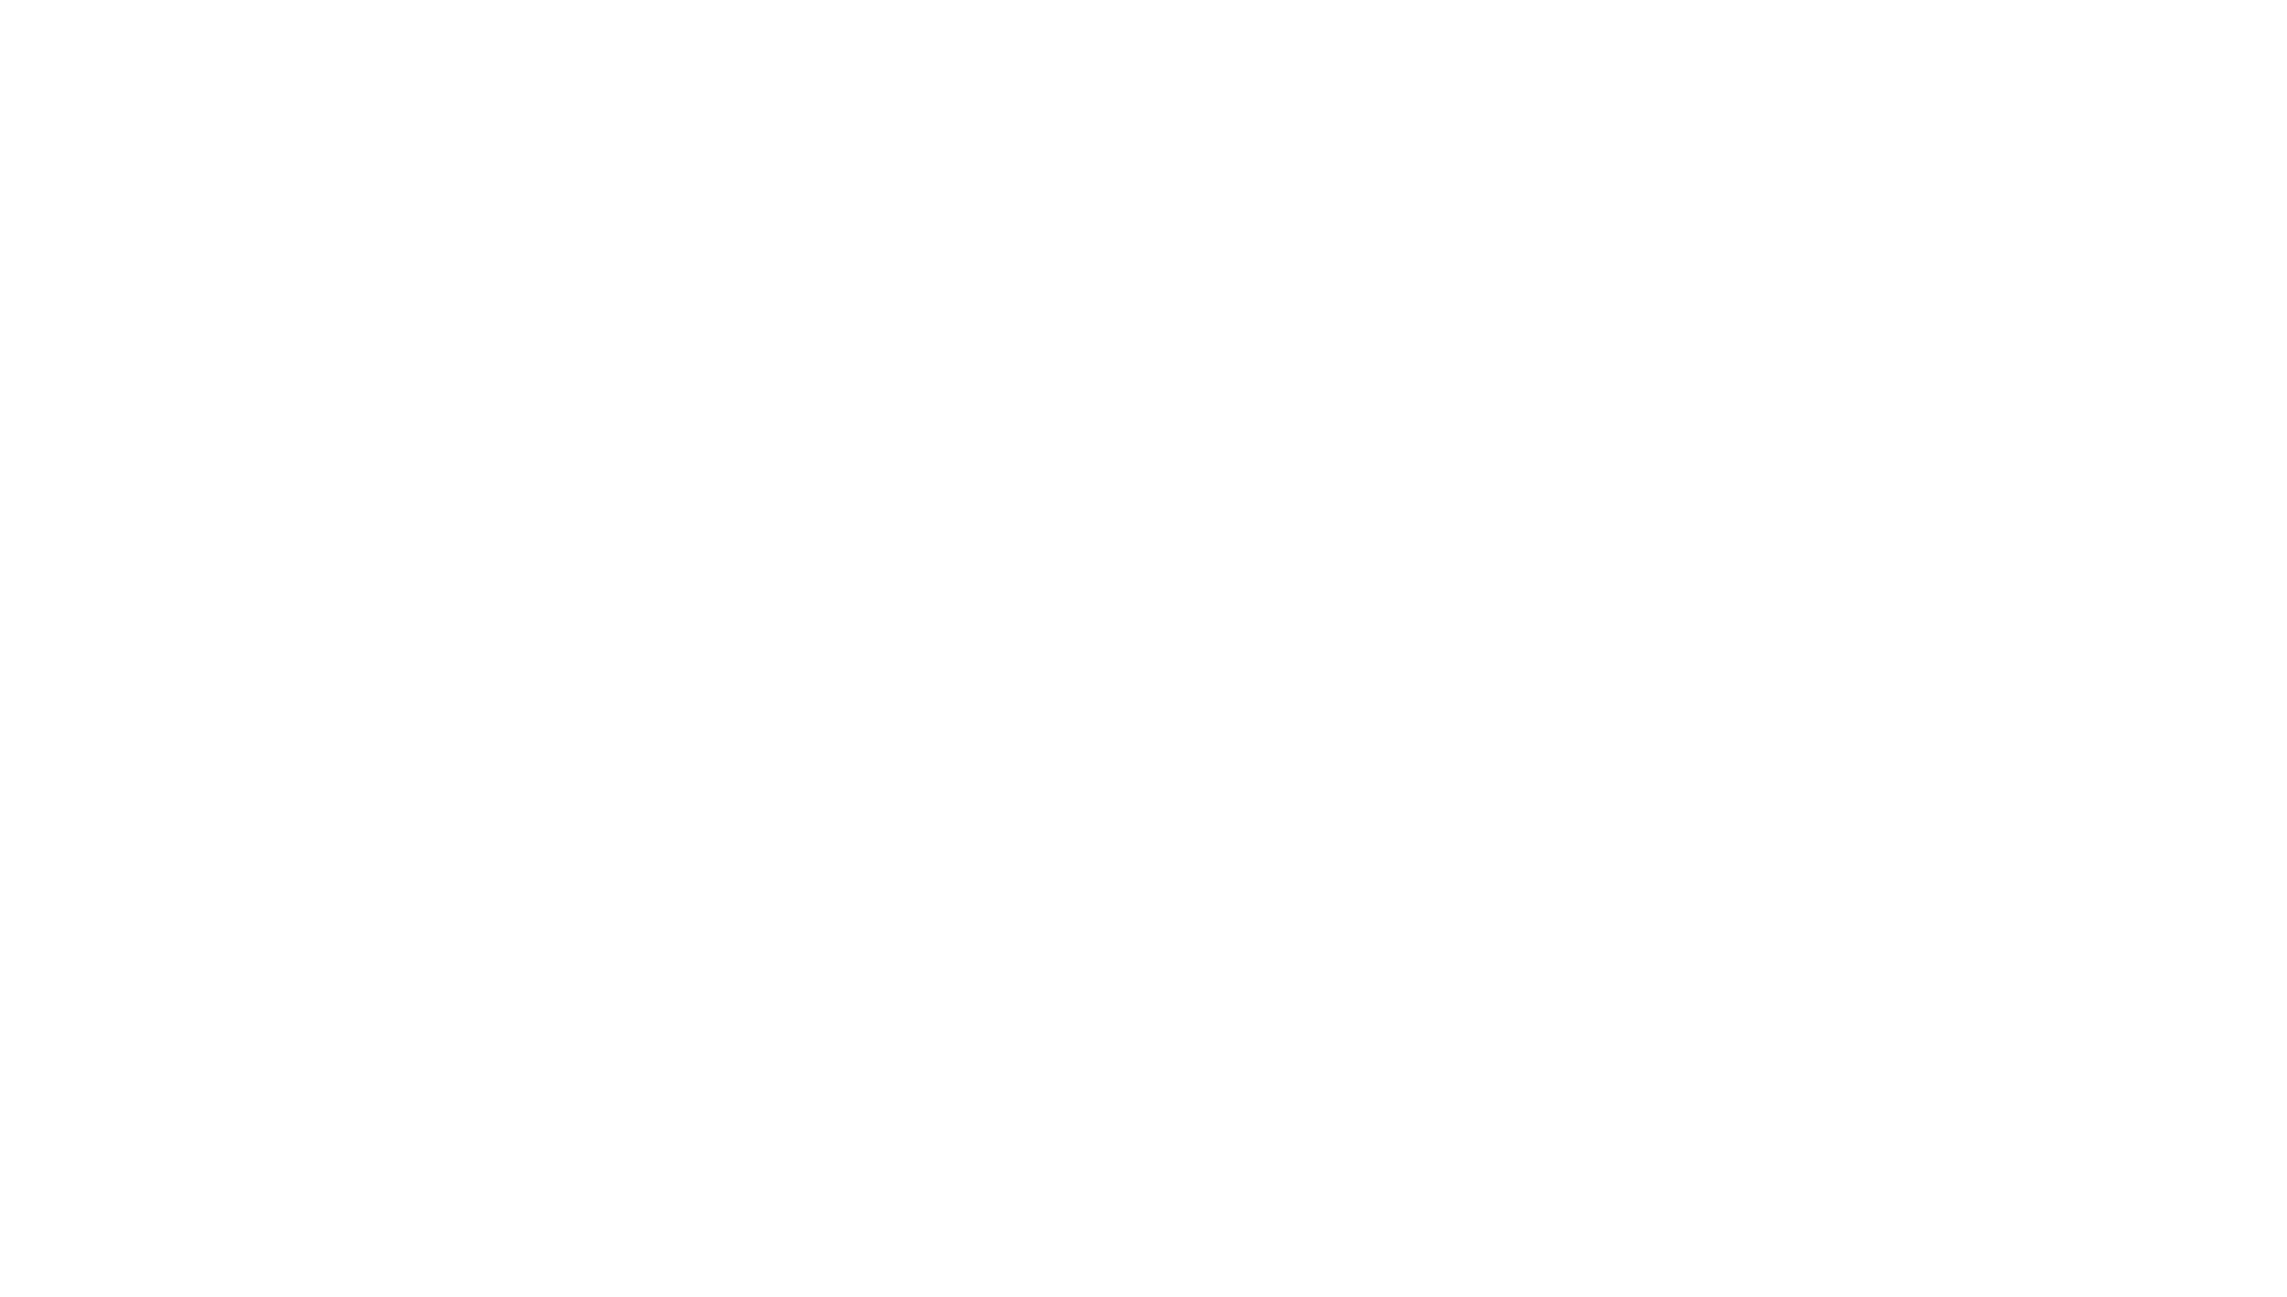 The Venture Bros. logo